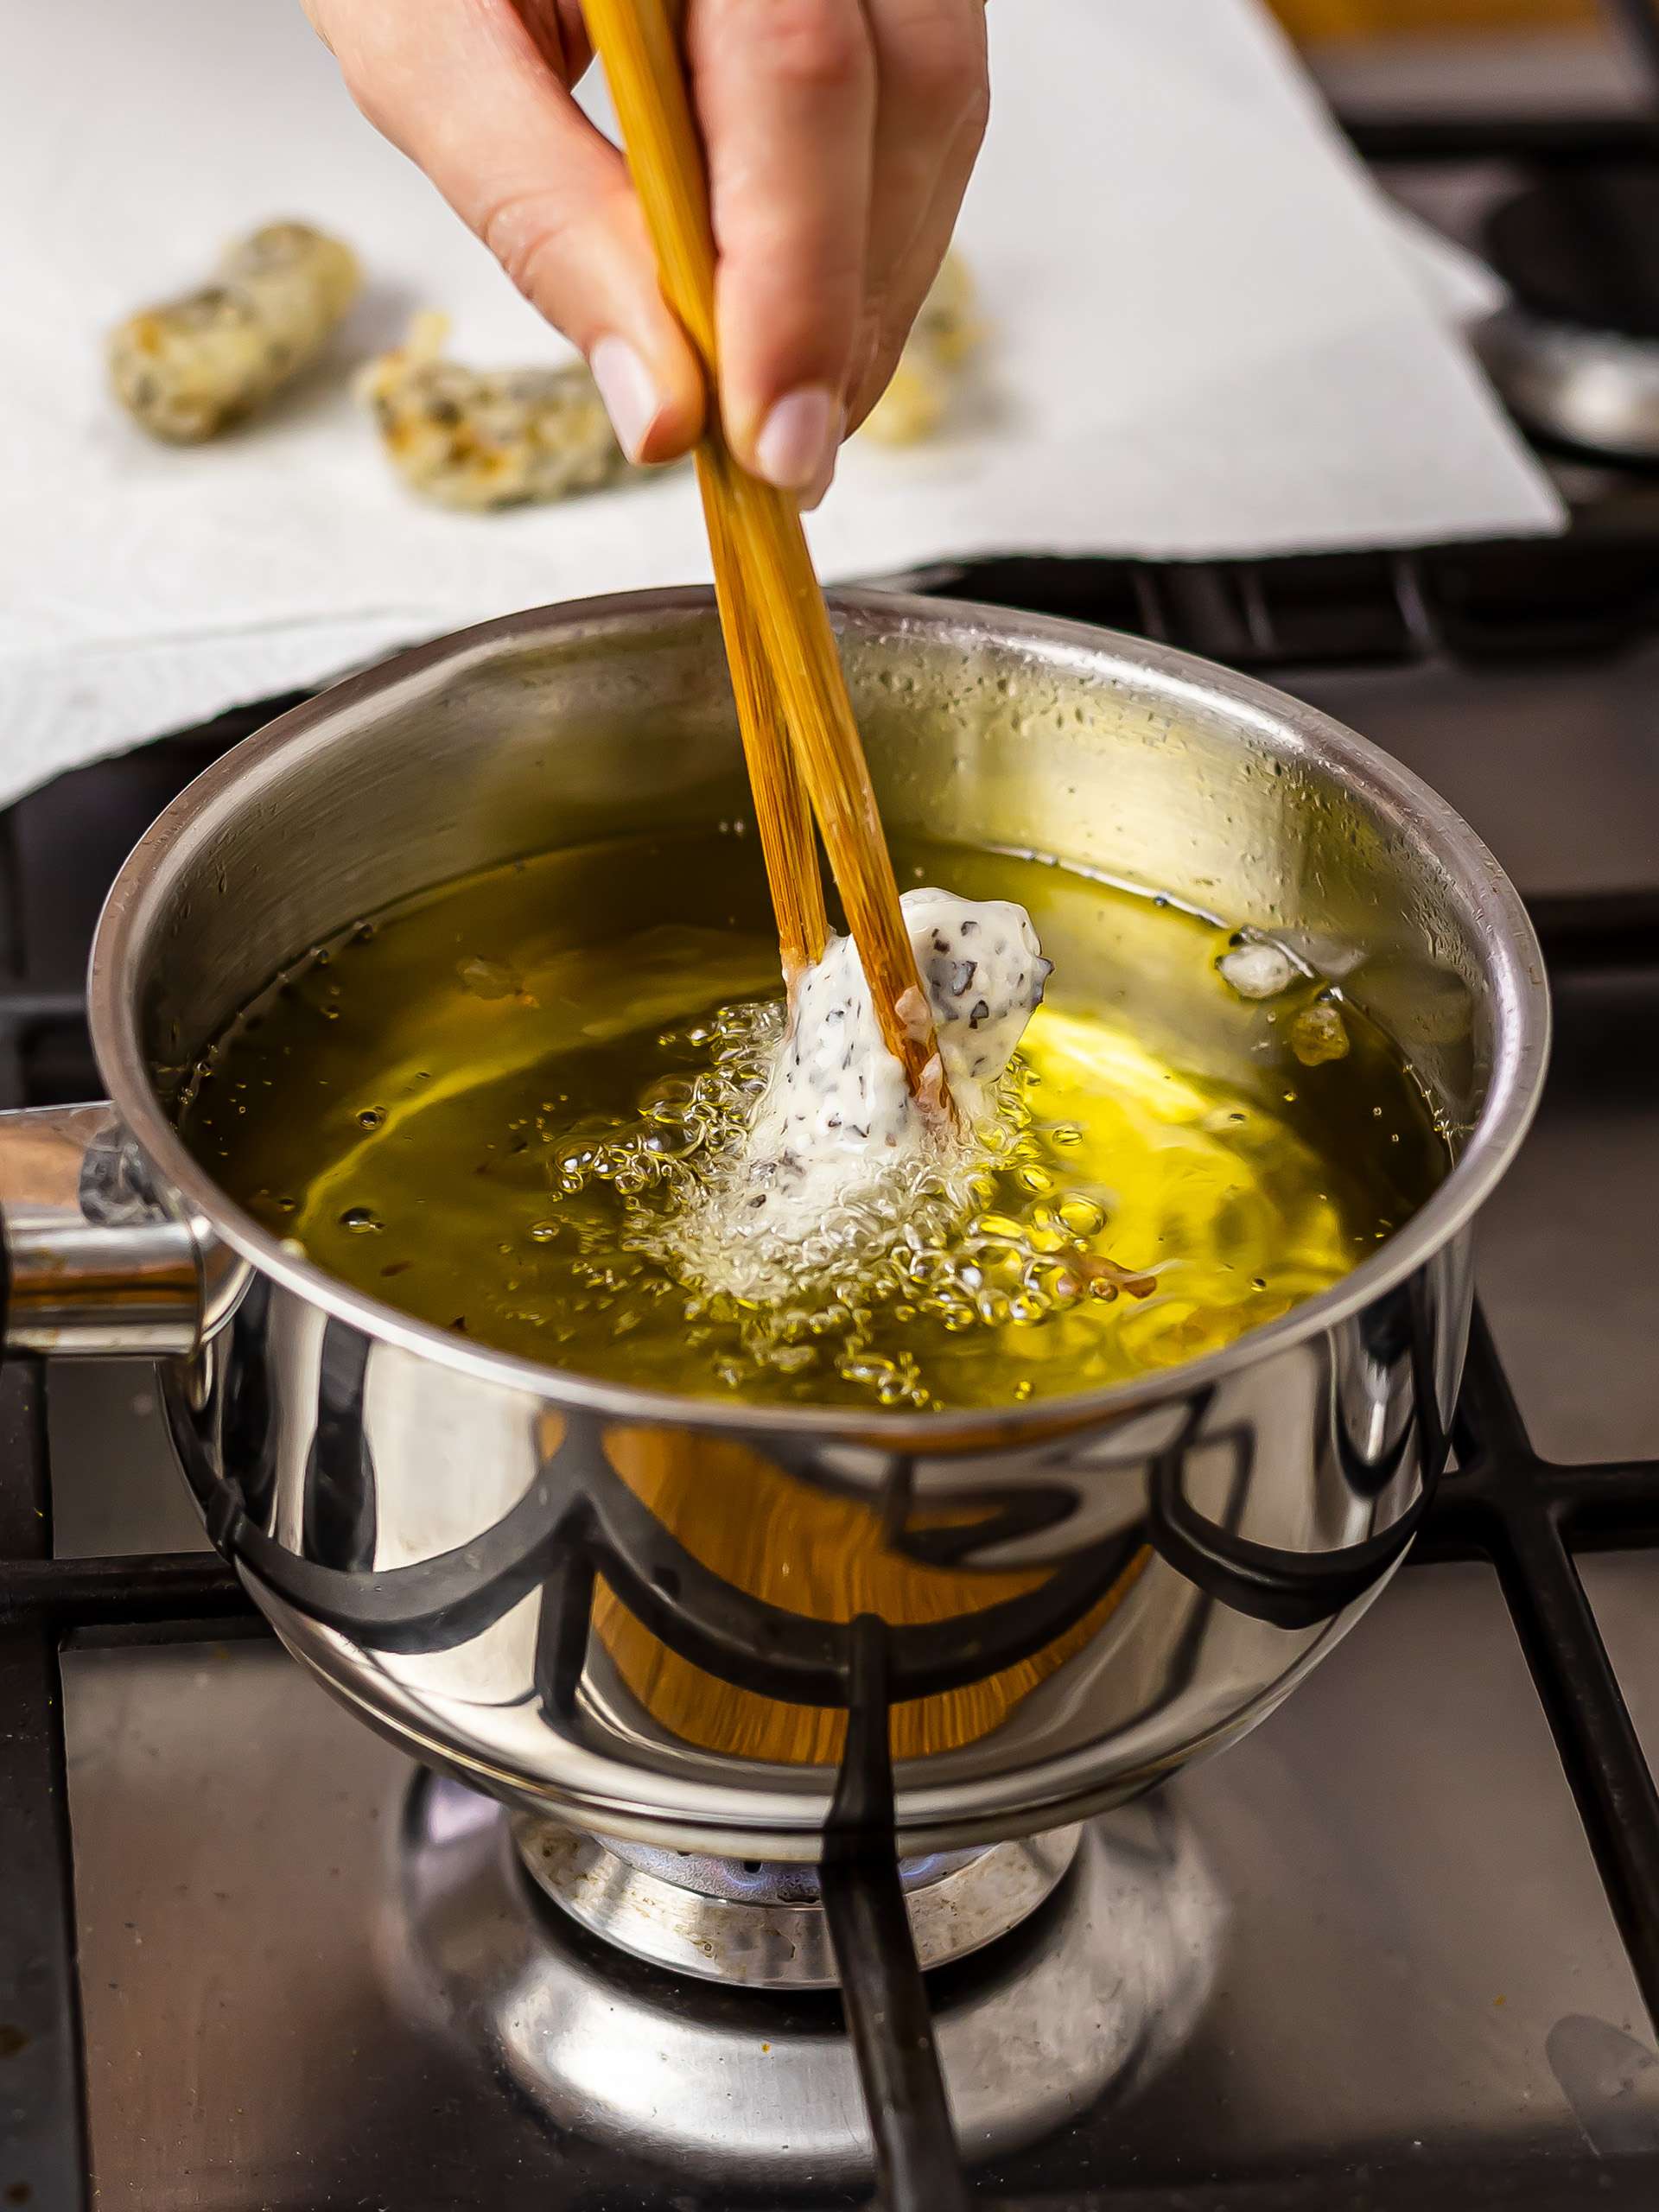 woman frying vegan ebi tempura in a pot with oil